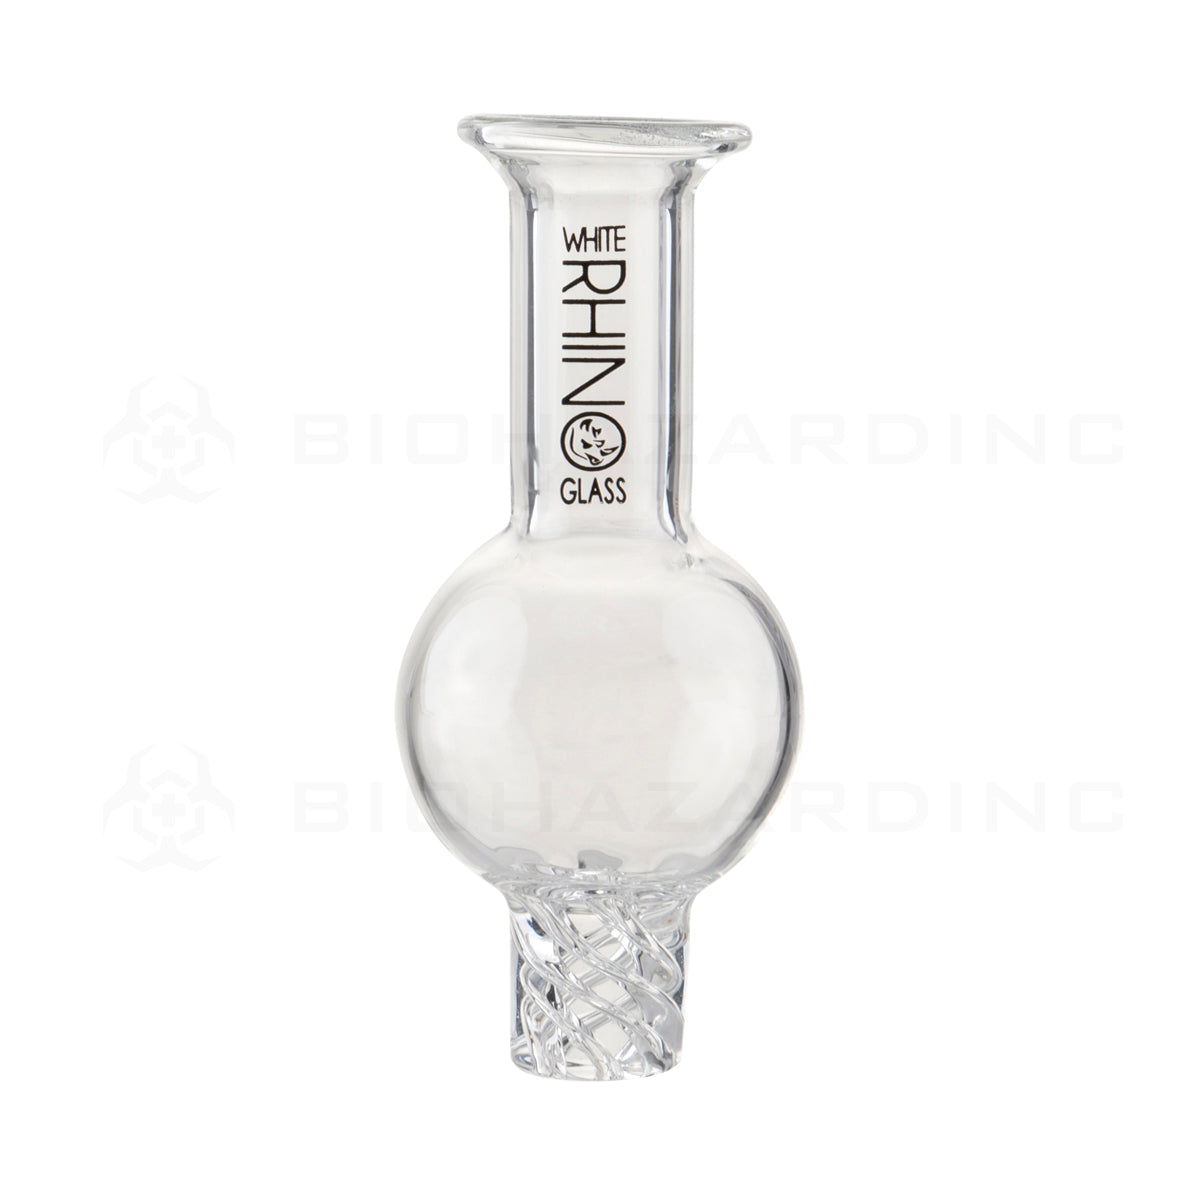 White Rhino | Glass Spinner Cap | 15 Count Carb Cap Biohazard Inc   